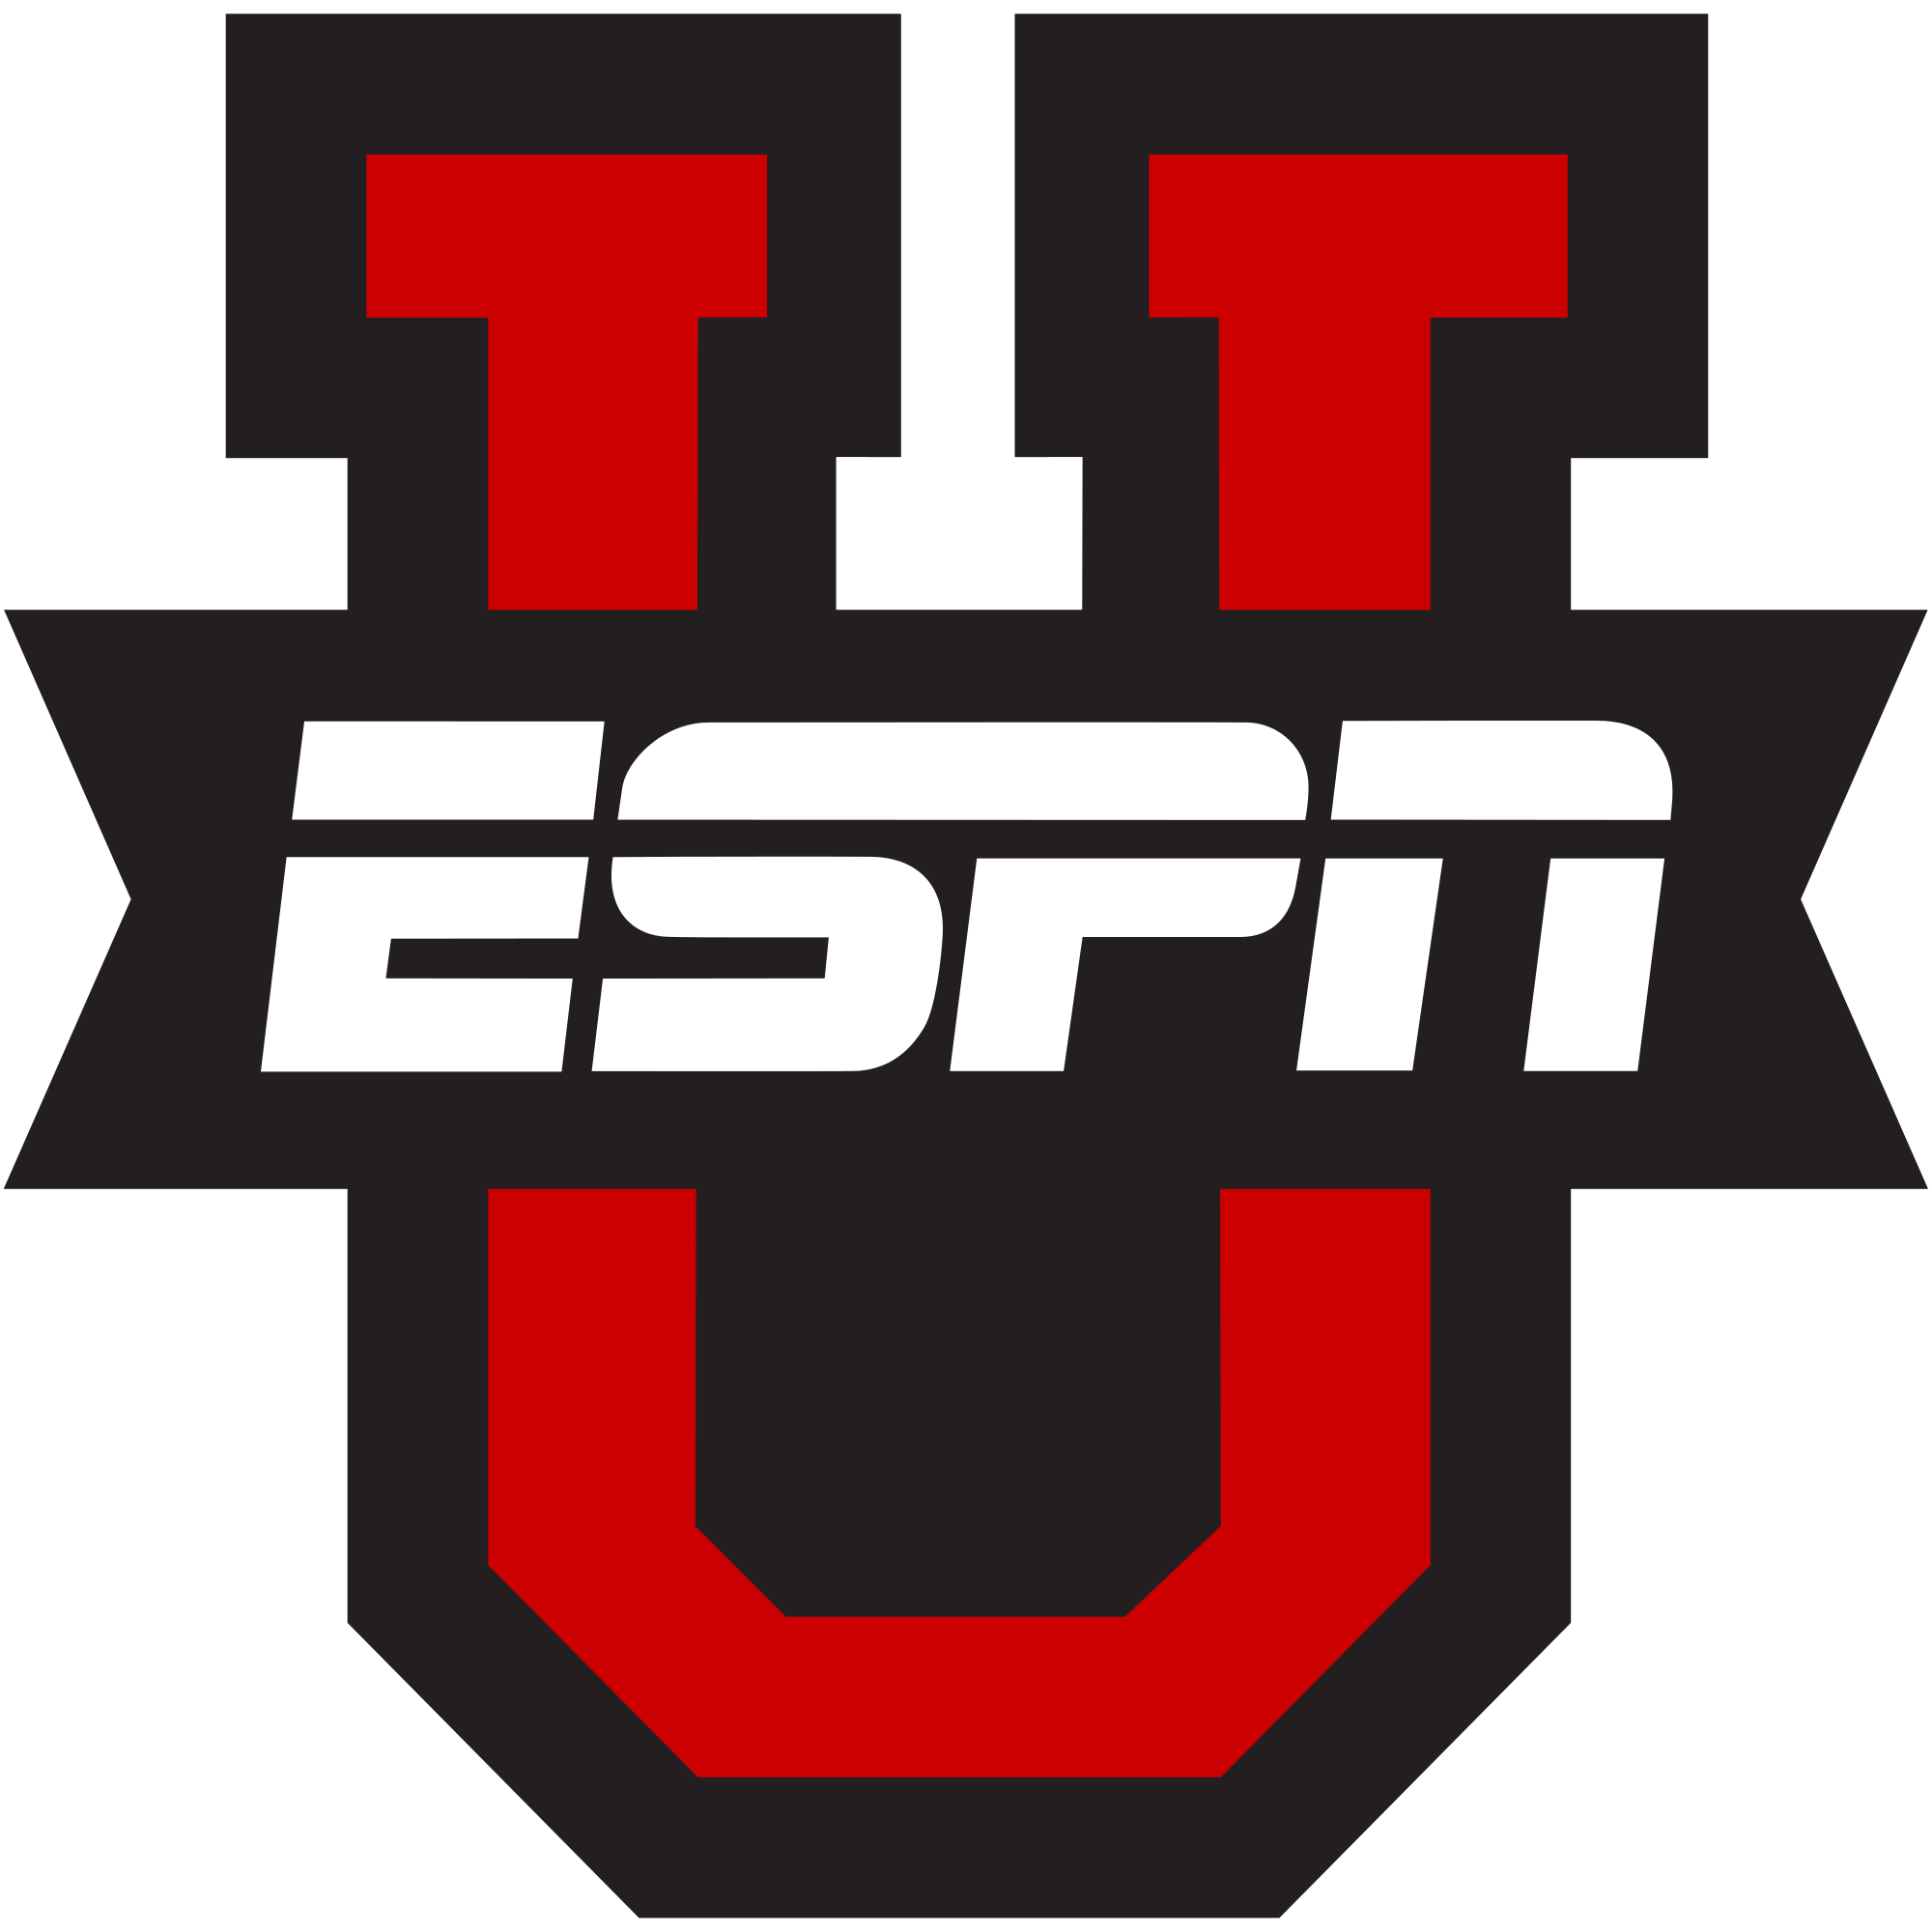 University U Logo - File:ESPN U logo.svg - Wikimedia Commons